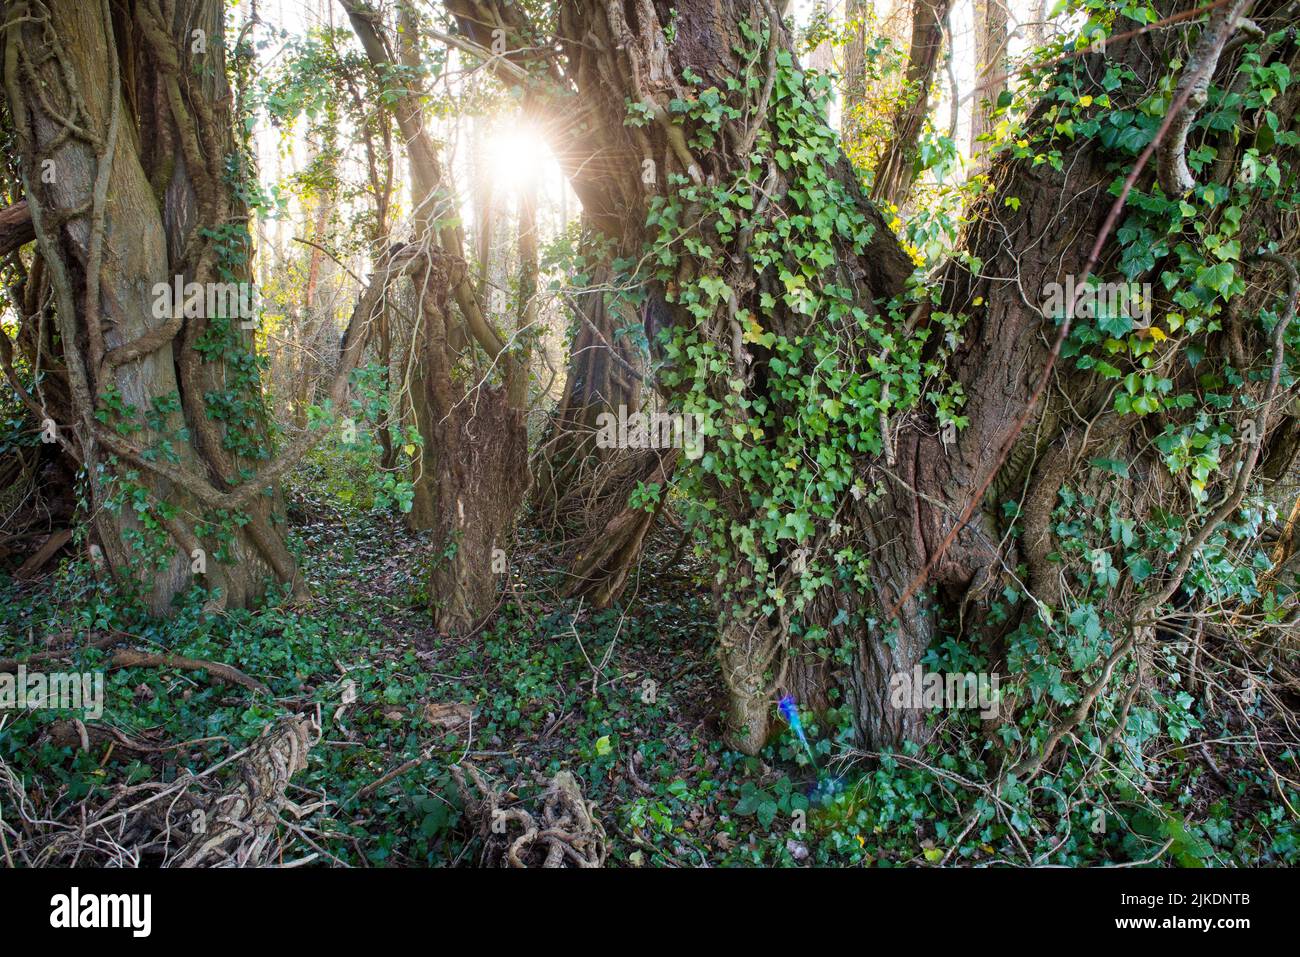 Undergrowth invaded by climbing ivy, Eure-et-Loir department, Centre-Val-de-Loire region, France, Europe. Stock Photo